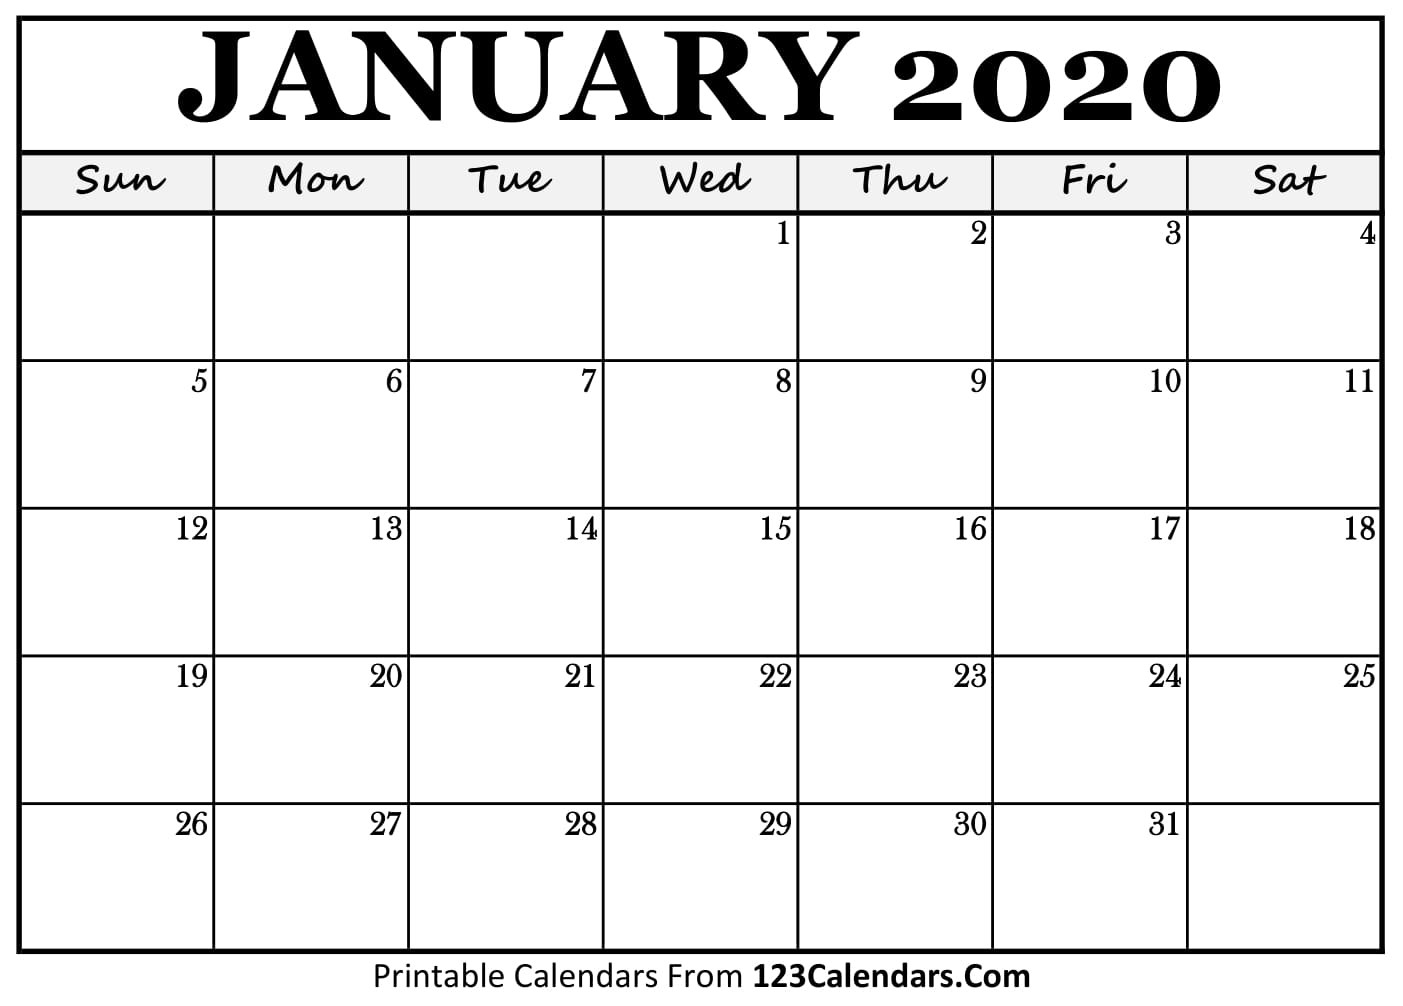 Free Printable Calendar | 123Calendars-Blank Calendar 2020 Printable Monthly